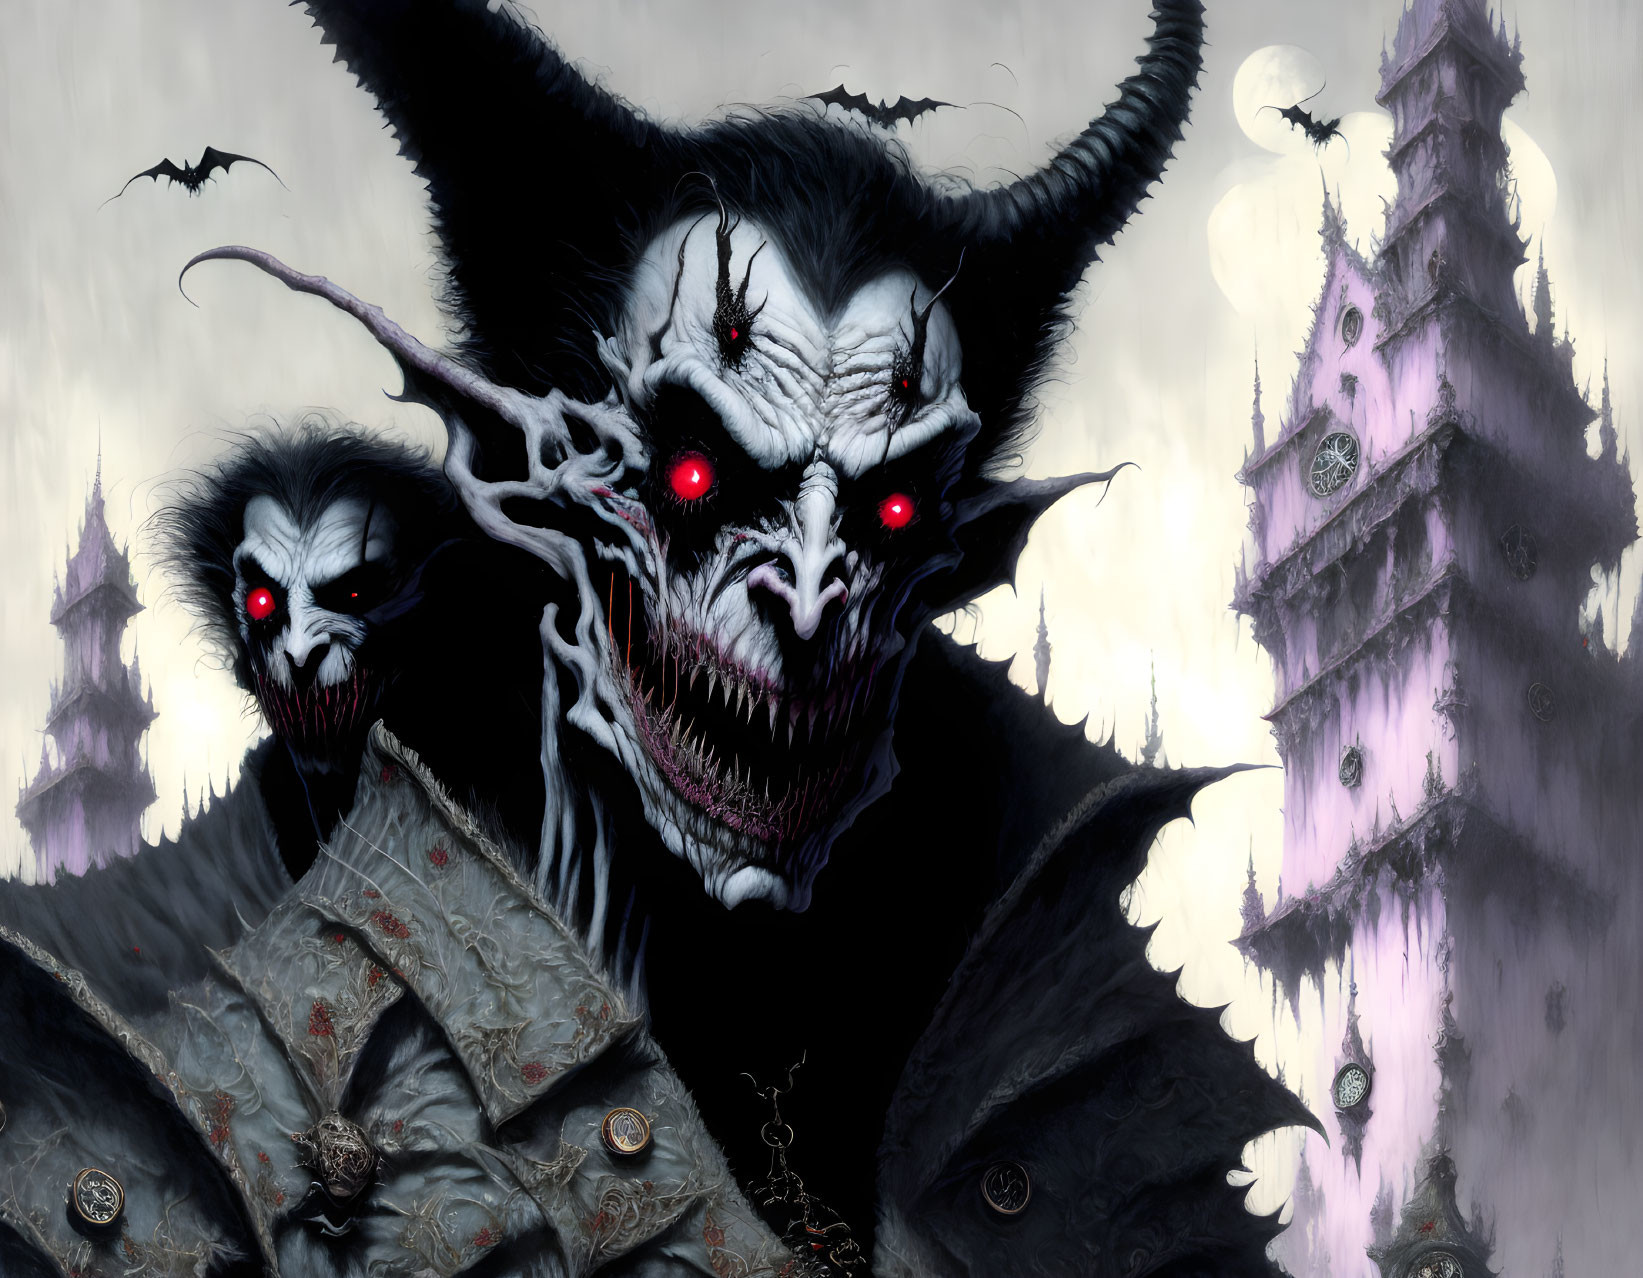 Fantasy scene: large horned creature, red eyes, sharp teeth, bats, dark towers,